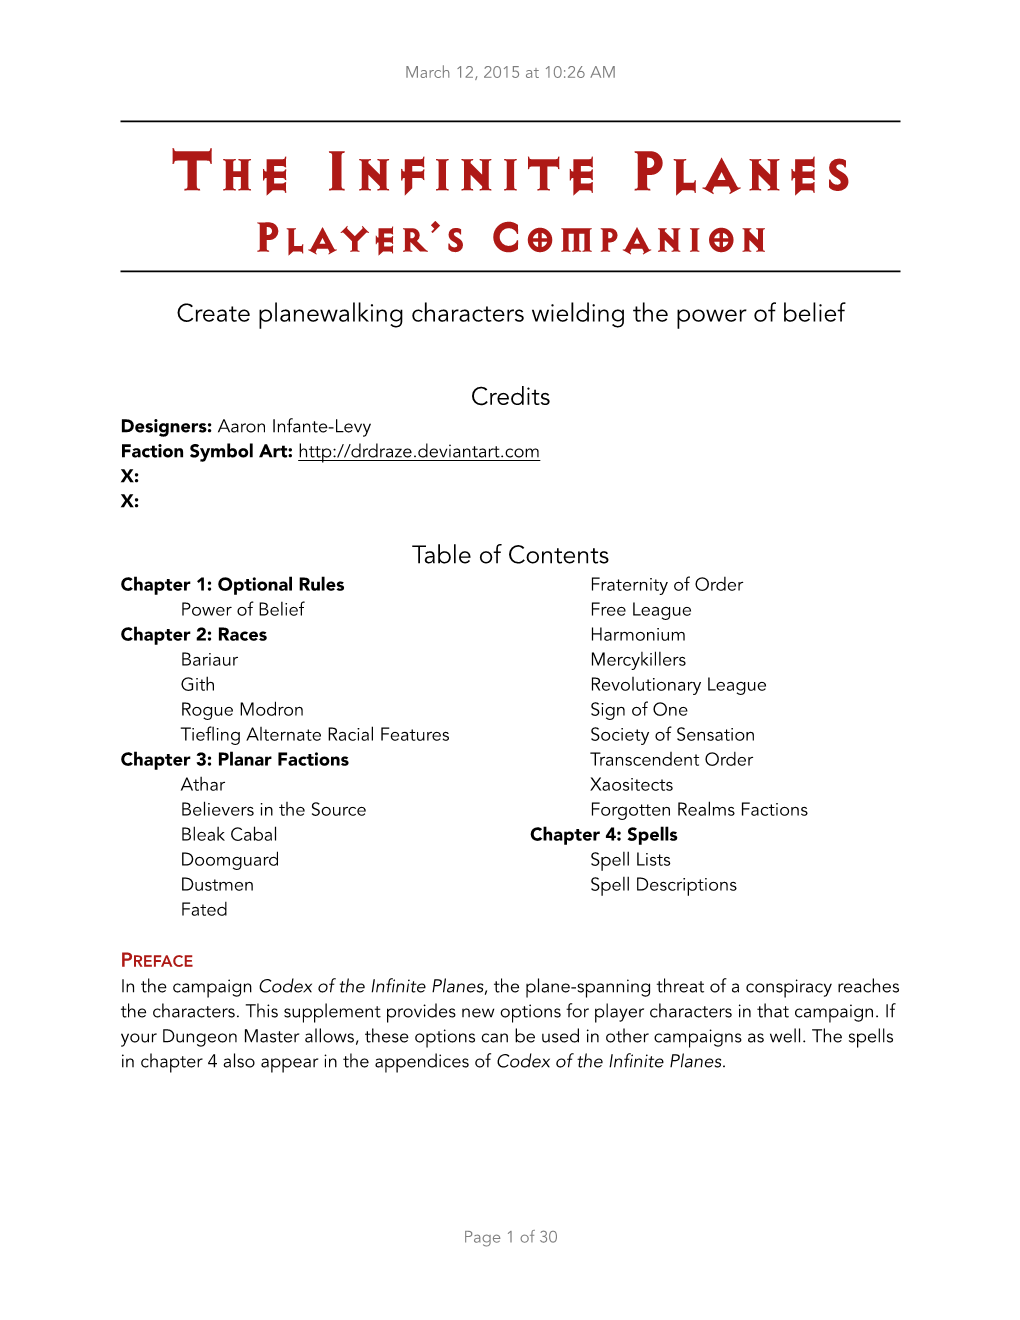 Infinite Planes Player's Companion